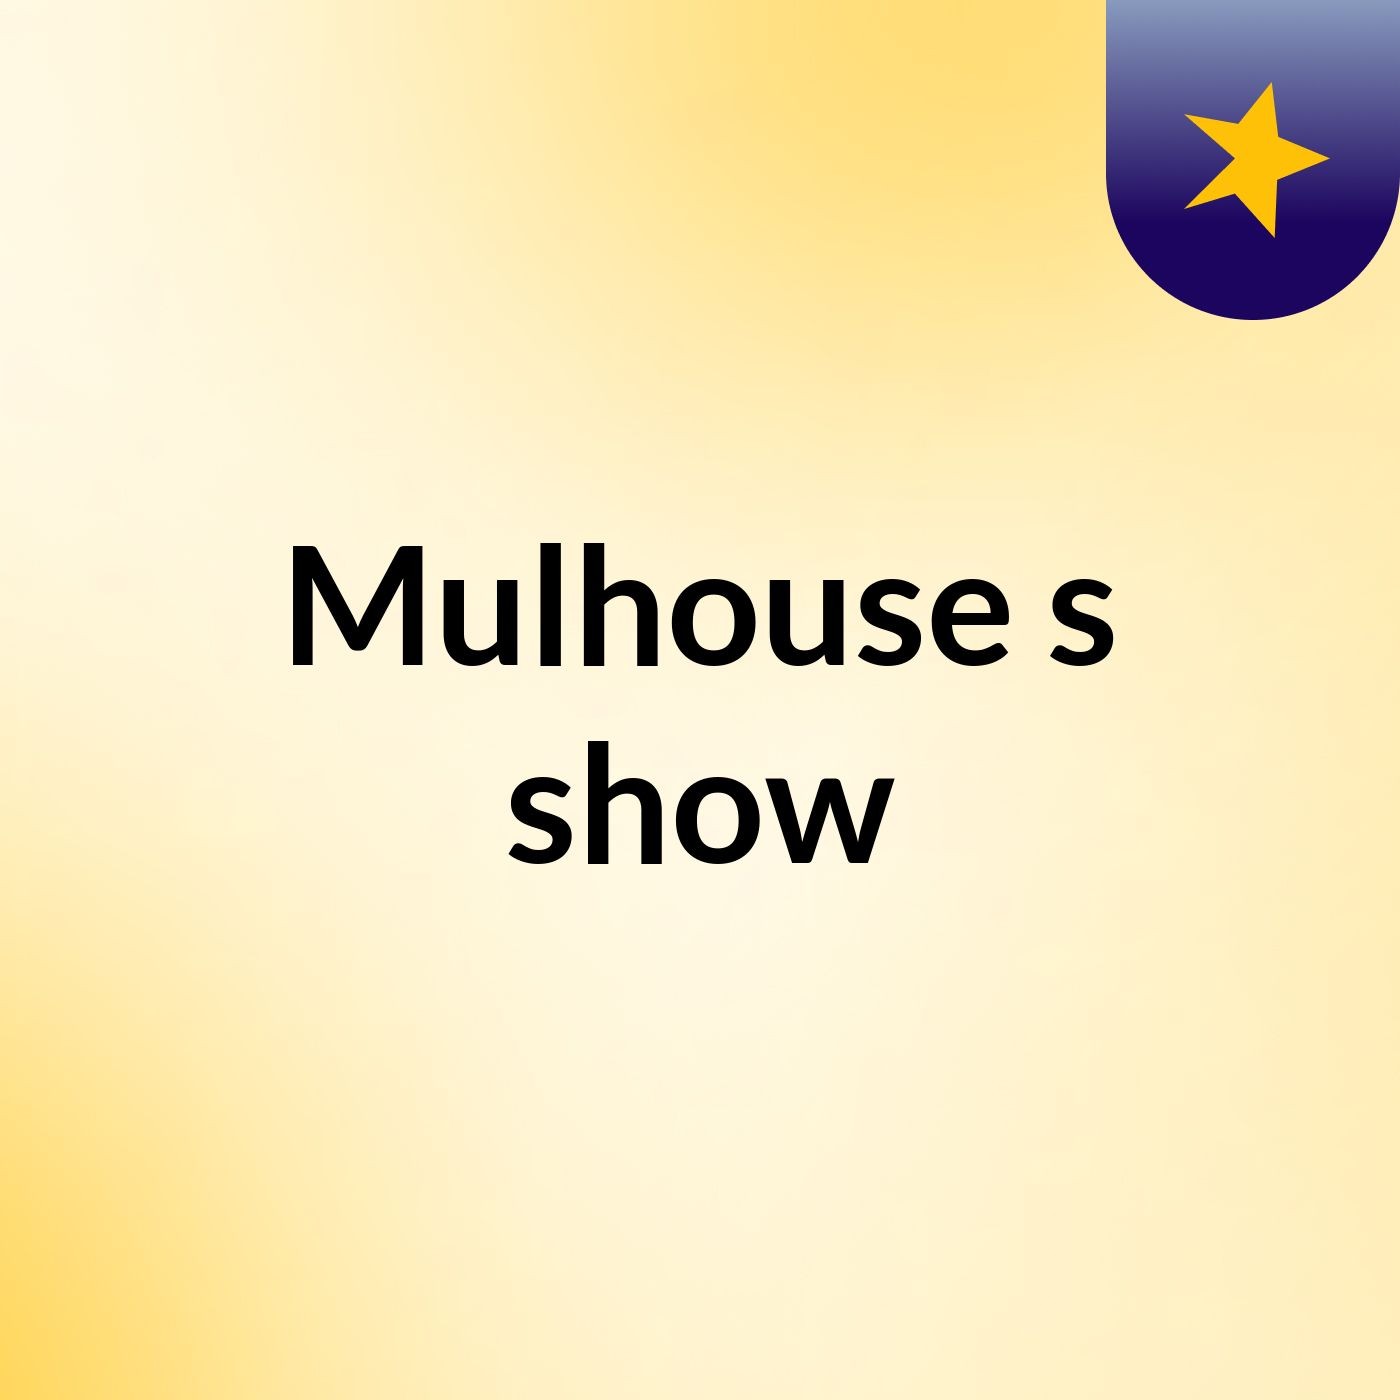 Mulhouse's show